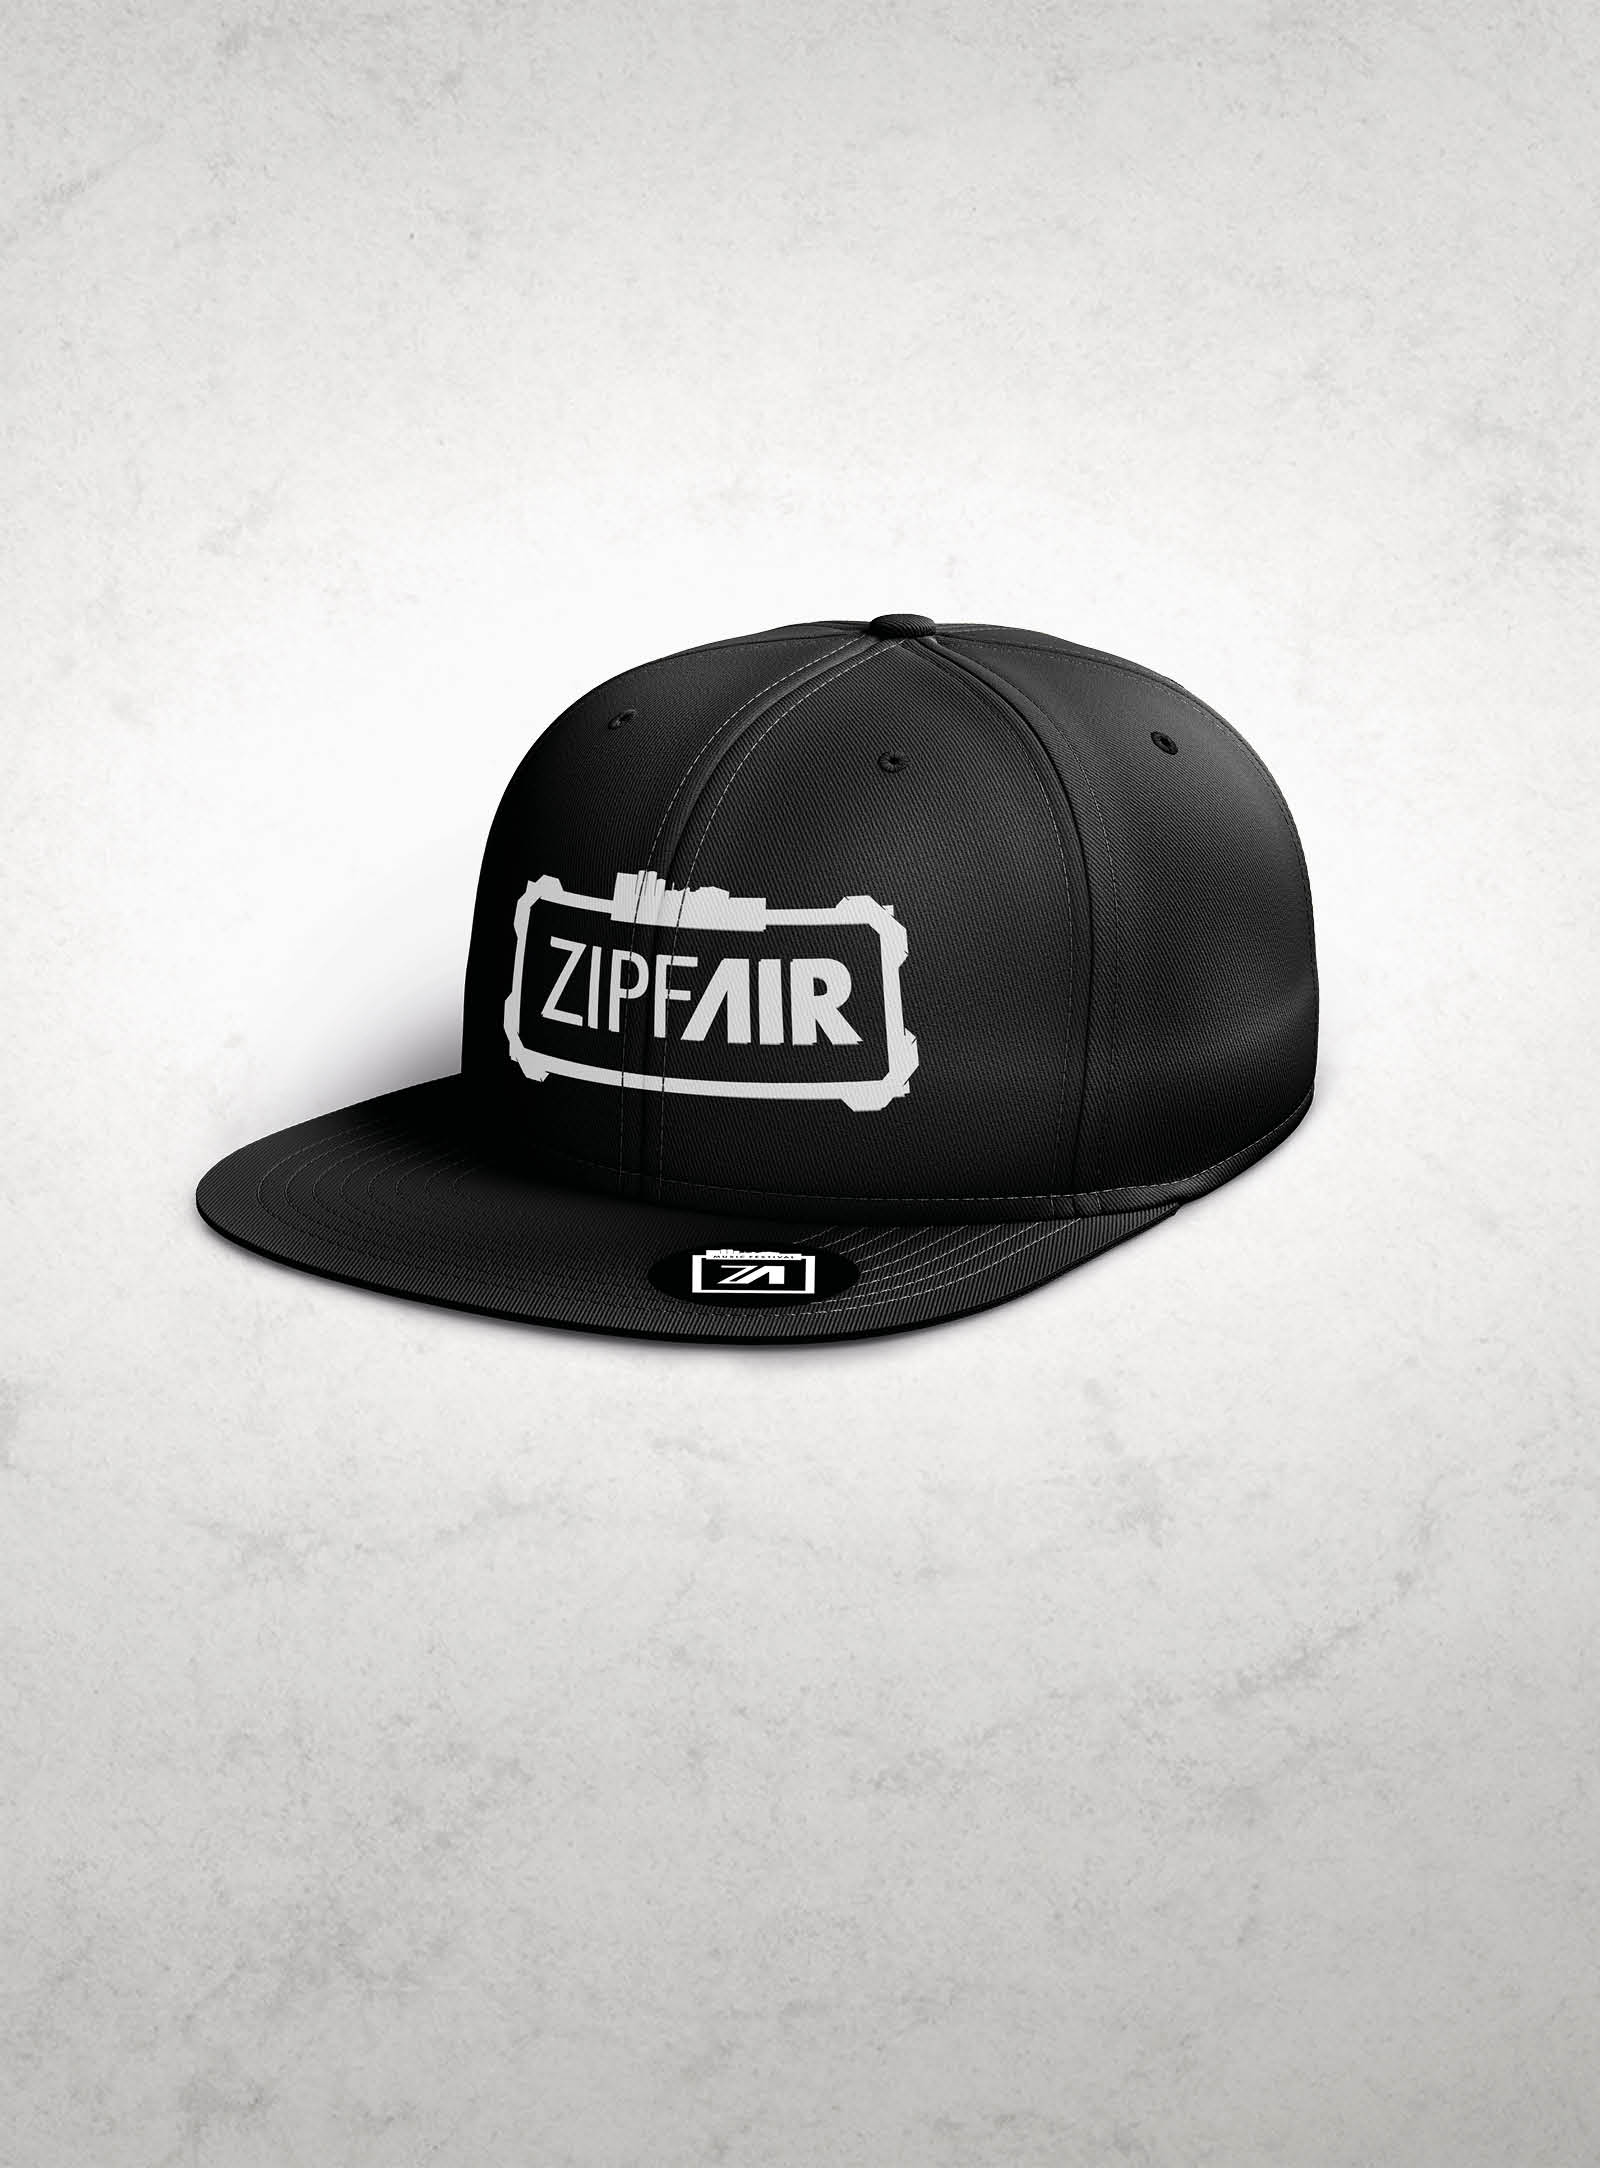 ZipfAir Snapback Cap black